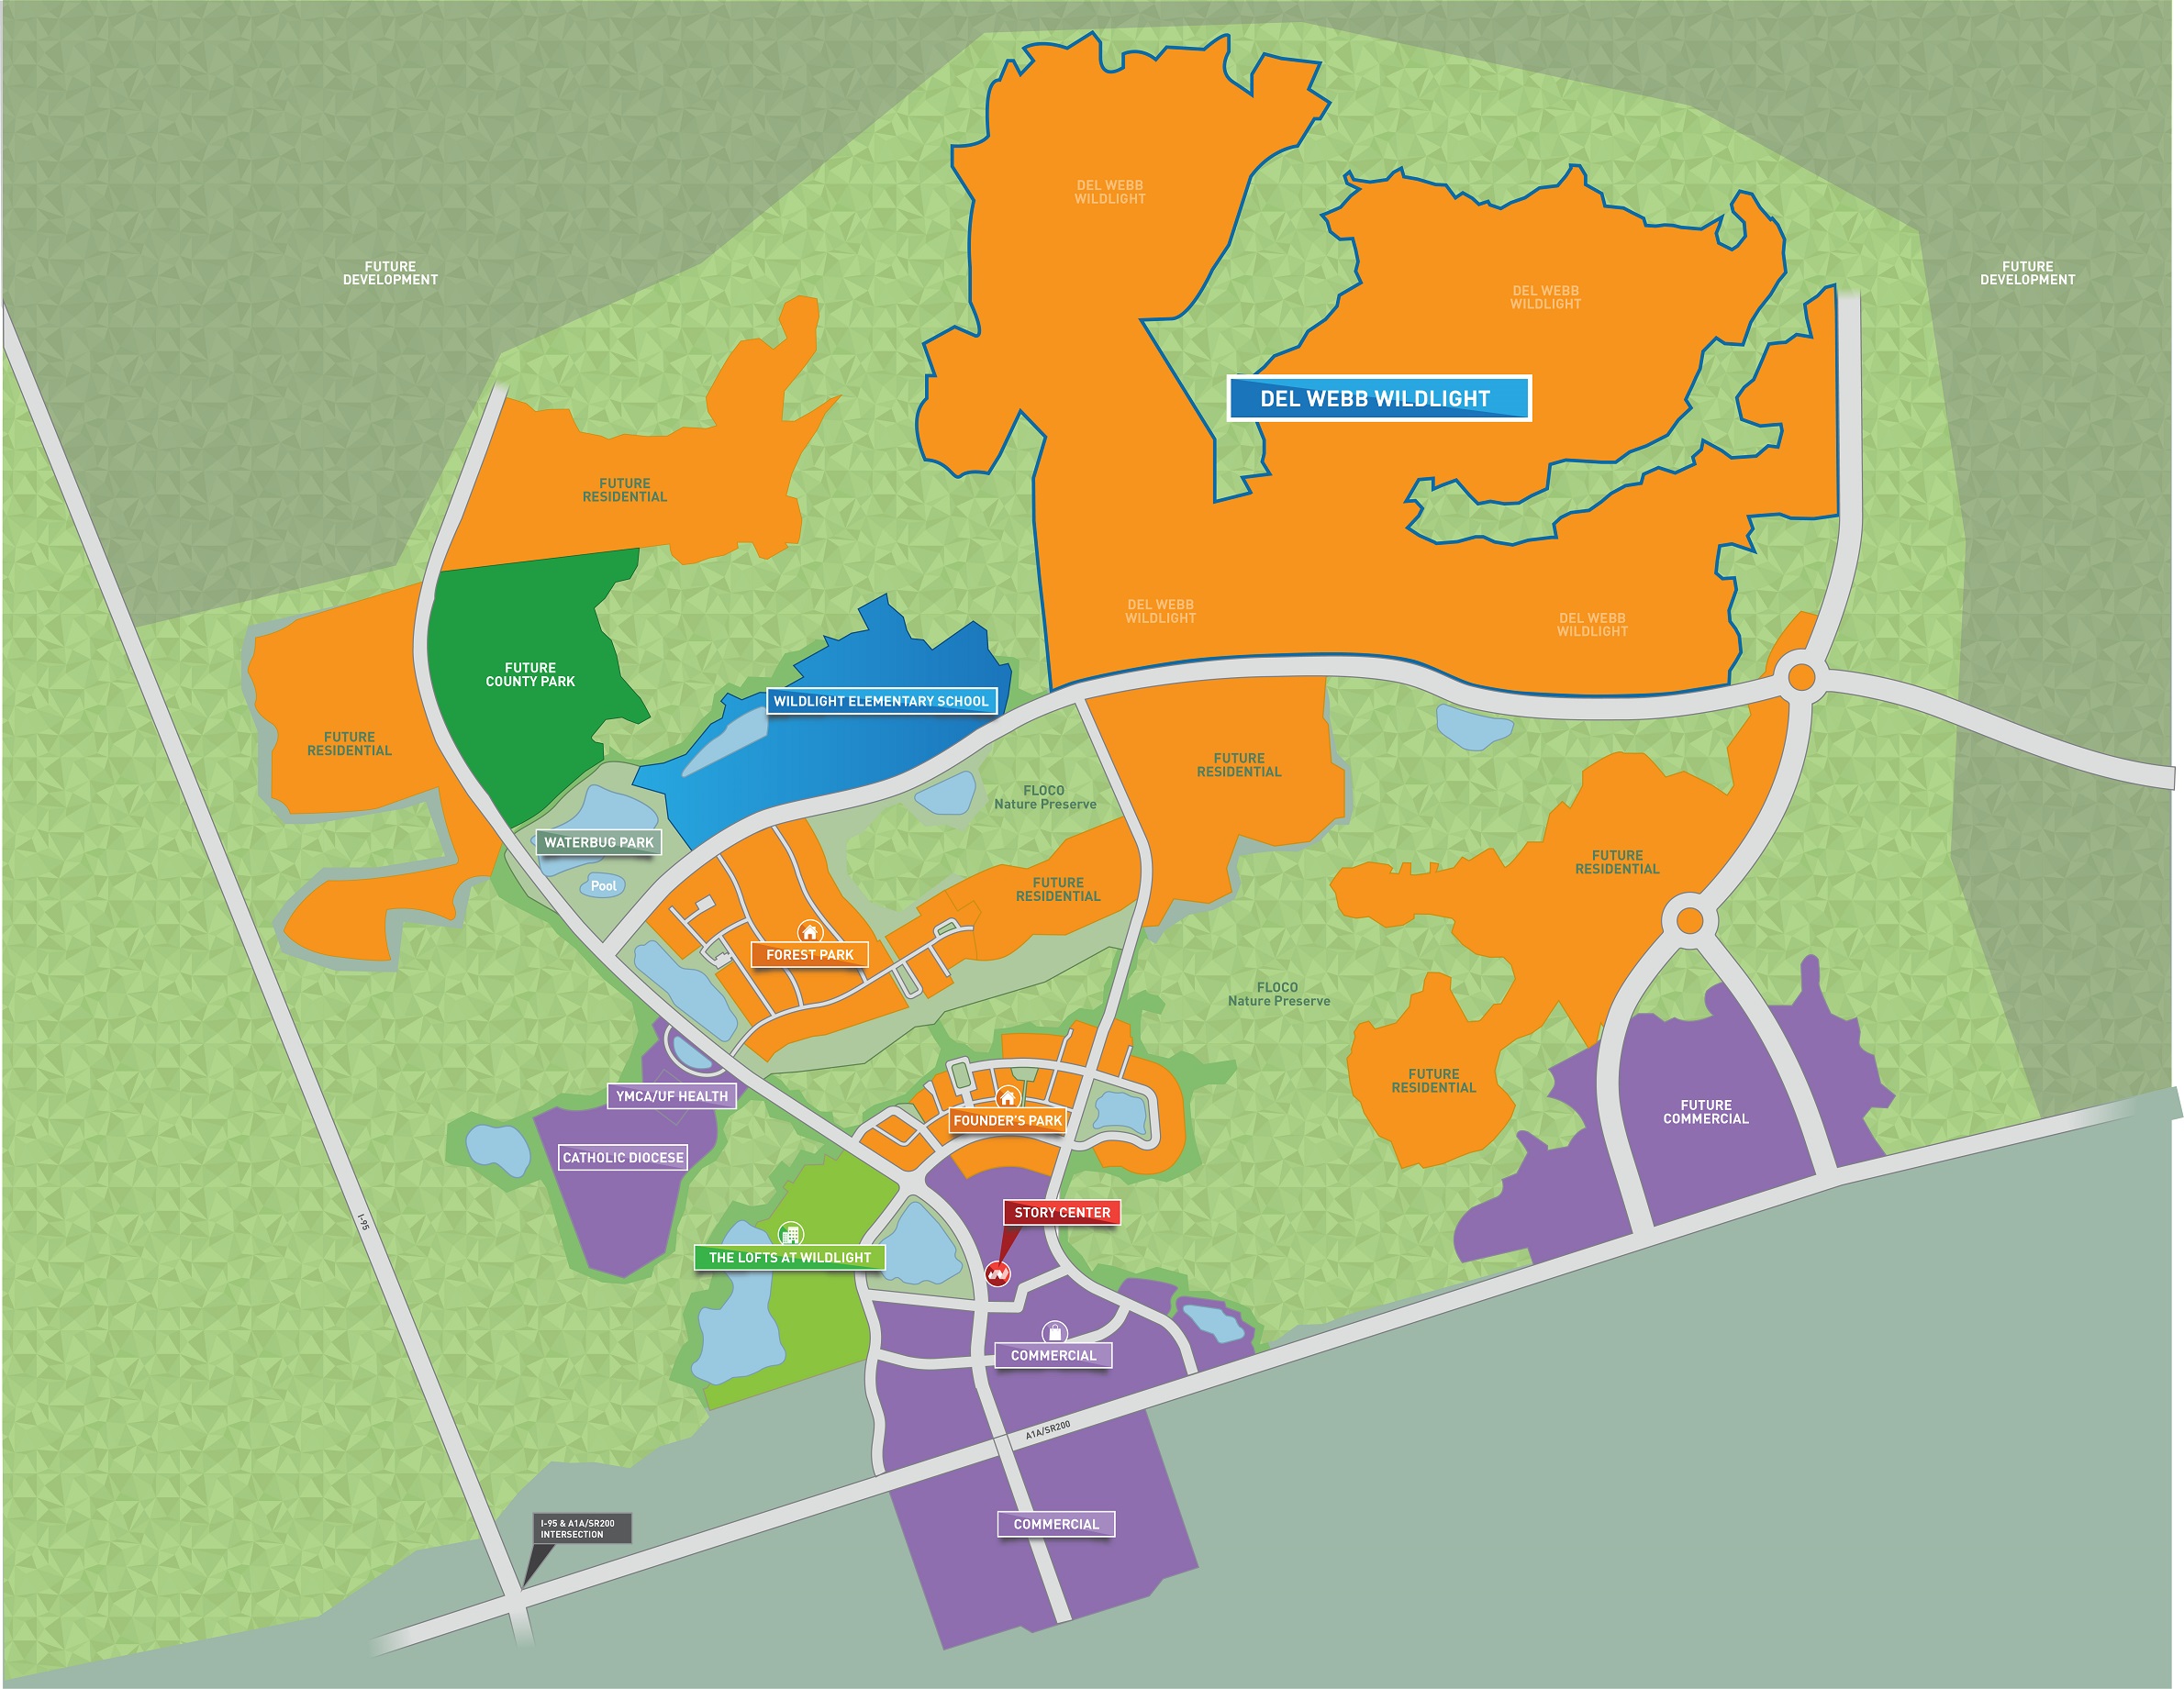 Updated Wildlight site plan showing Del Webb's footprint.